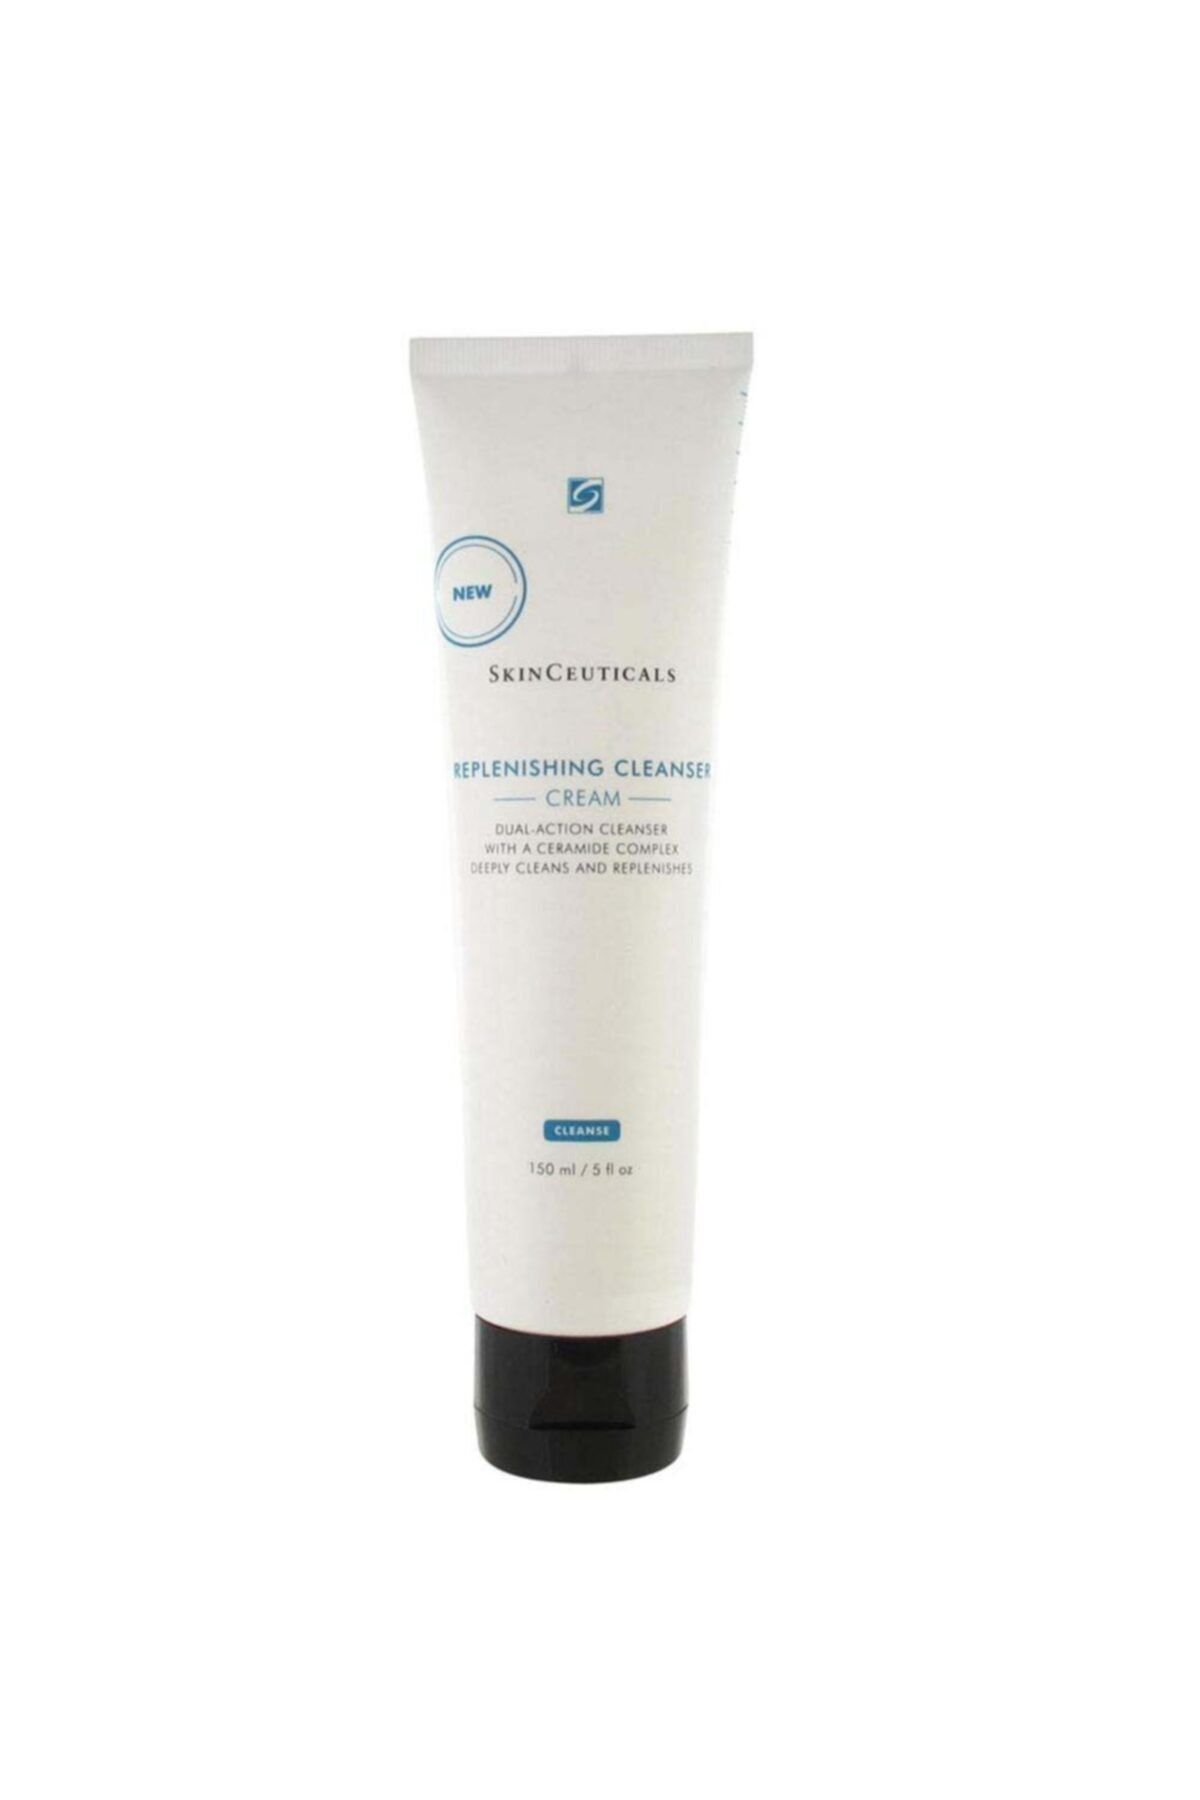 Skinceuticals Skin Ceuticals Replenishing Cleanser Cream 150 ml